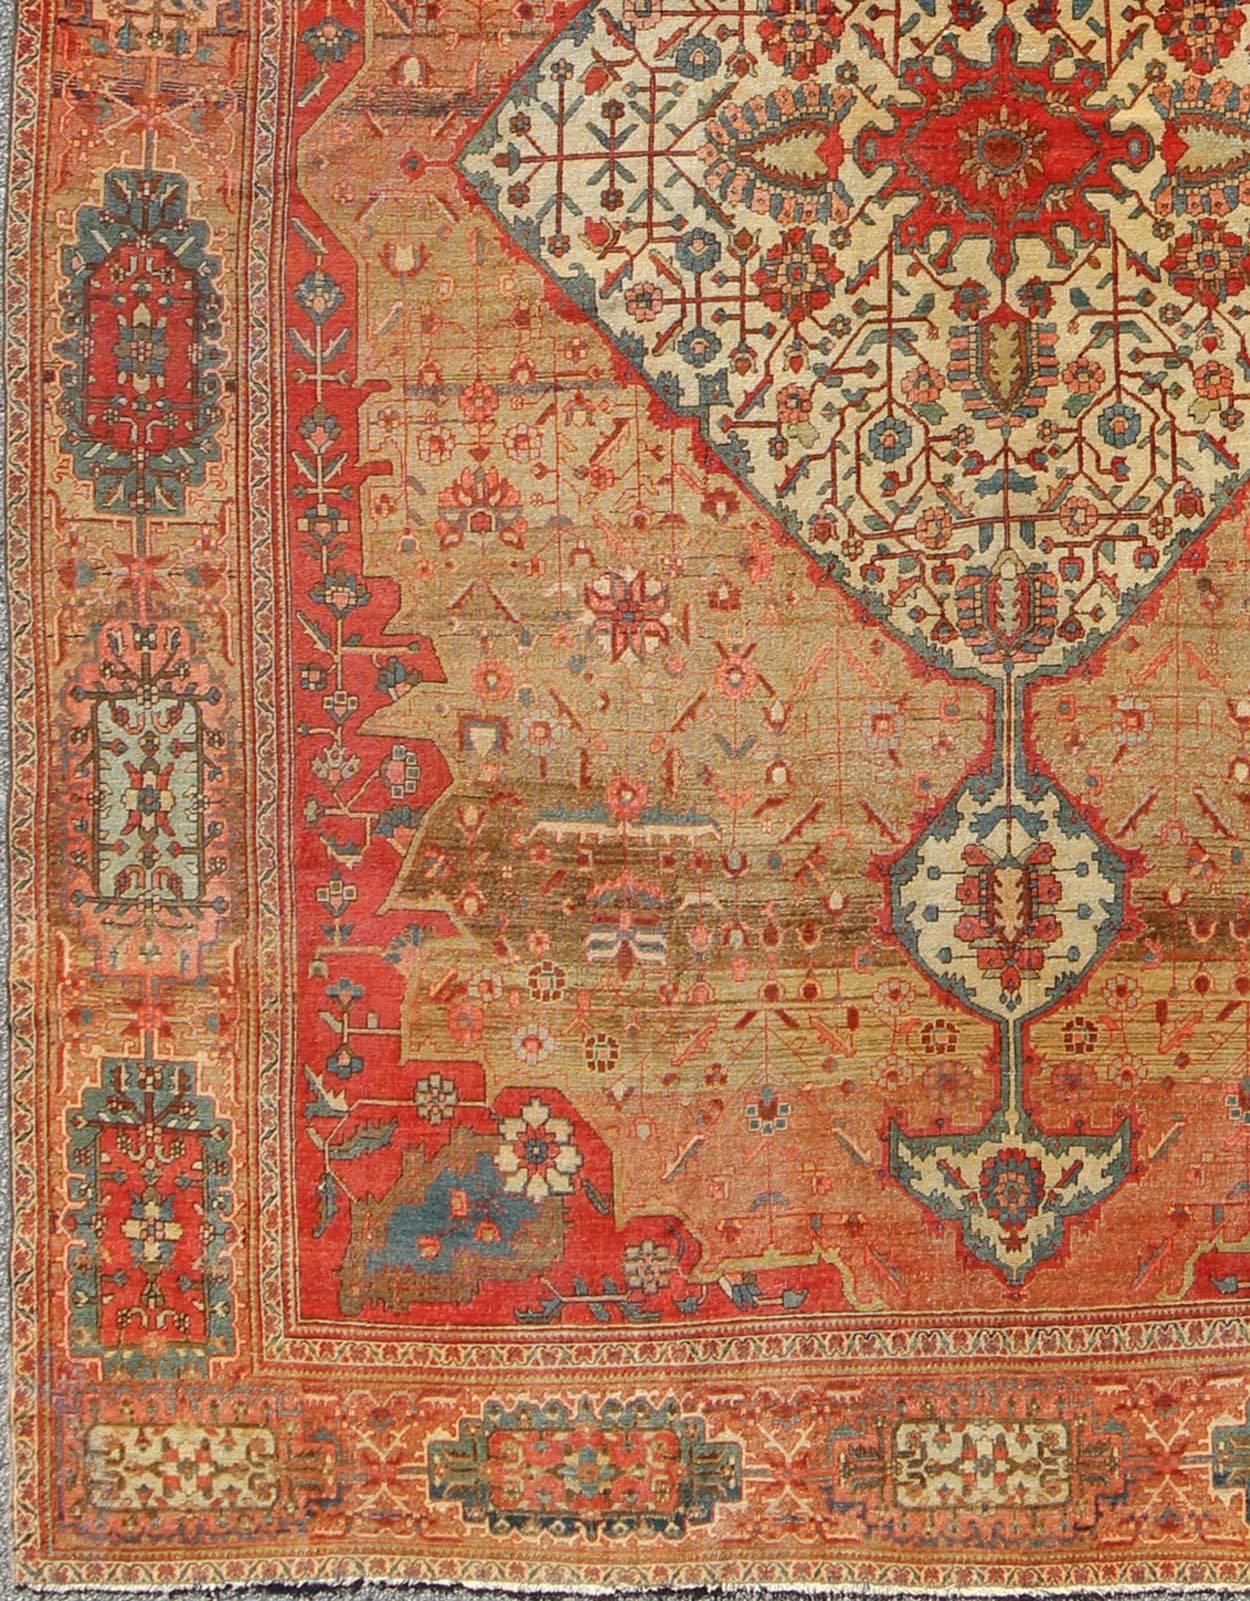 Antique Persian Sarouk Feraghan rug, Keivan Woven Arts / rug C-0921, country of origin / type: Iran / Feraghan Sarouk, Sarouk Feraghan , circa 1890.

Measures: 8'6 x 12'2


This exquisite antique Persian Farahan Sarouk rug showcases an alluring